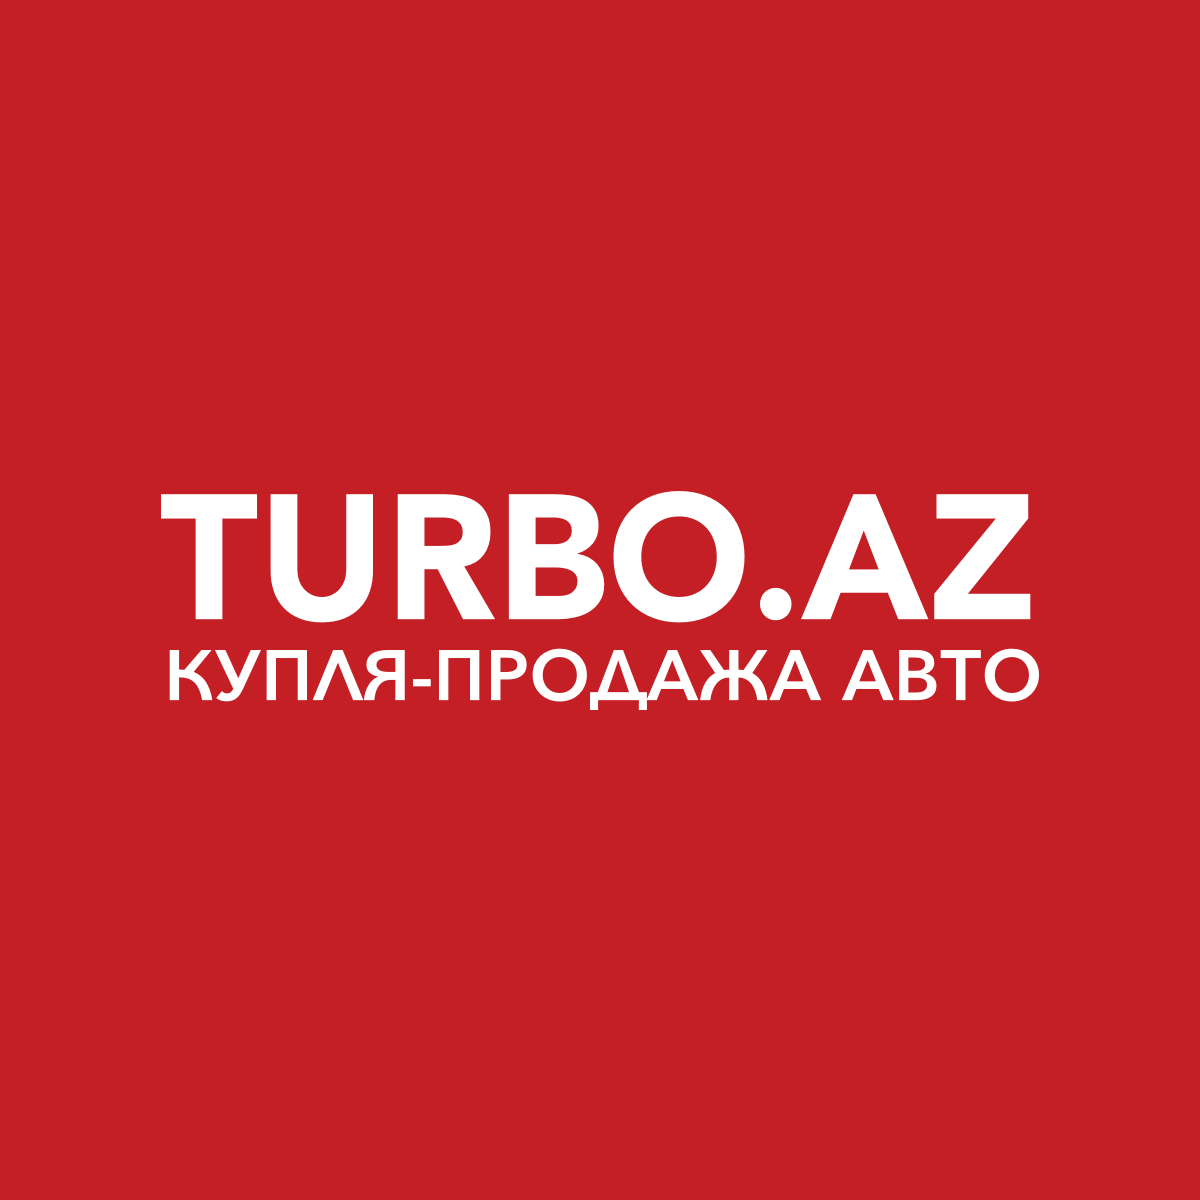 turbo-logo-ru-4762d0021ba99ed00d063470c3